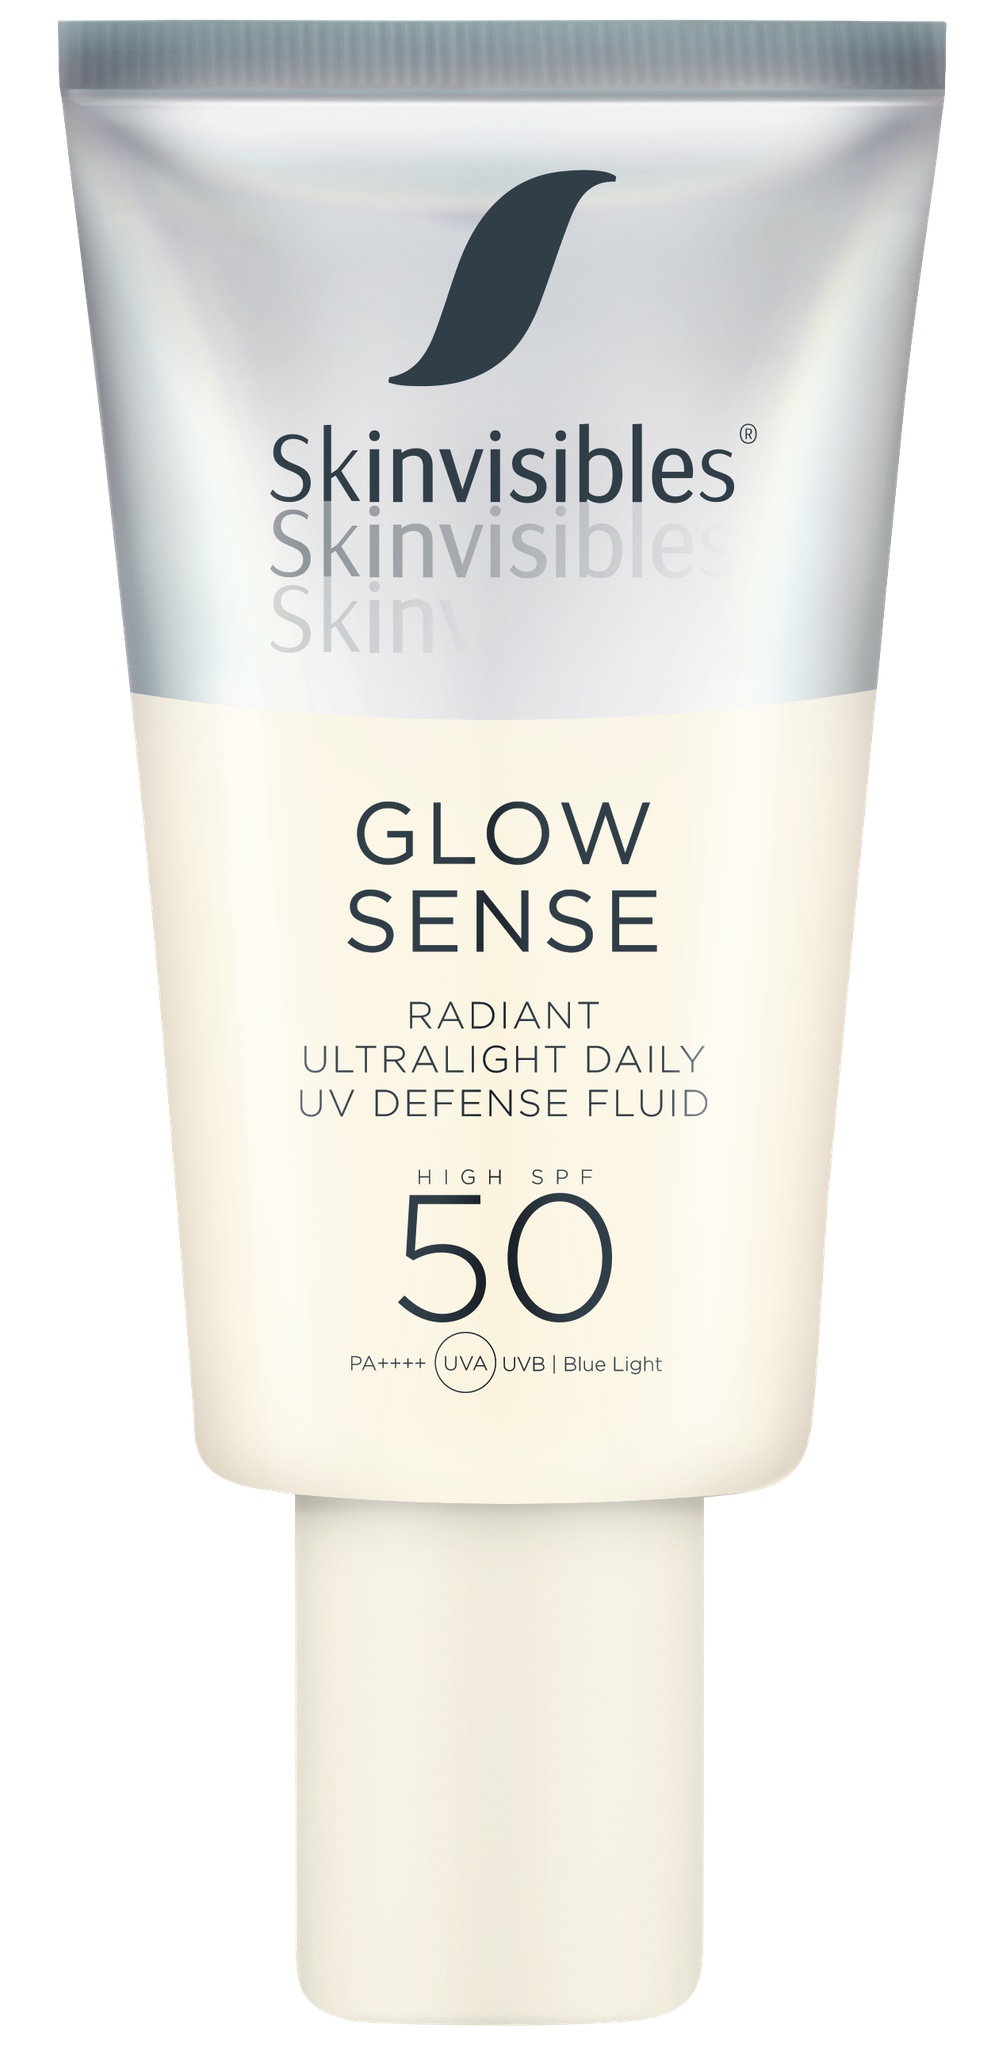 Skinvisibles Glow Sense Radiant Ultralight Daily UV Defense Fluid SPF 50